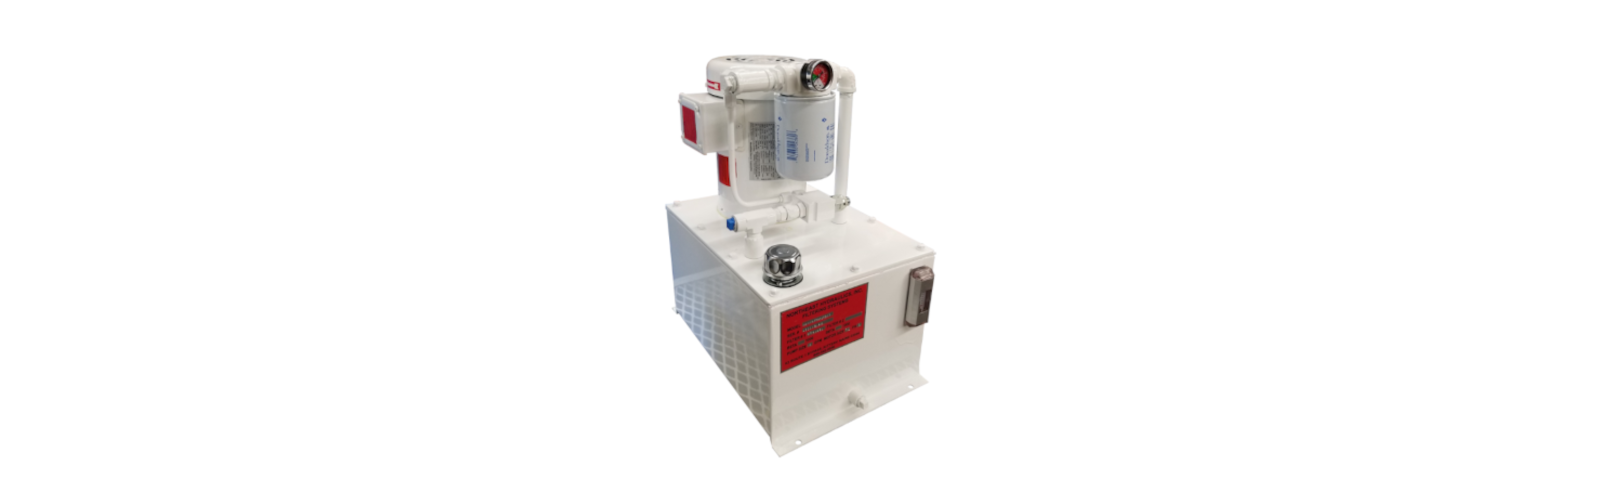 Sleep Apnea & N95 Respiratory Mask Press Hydraulic Power Unit